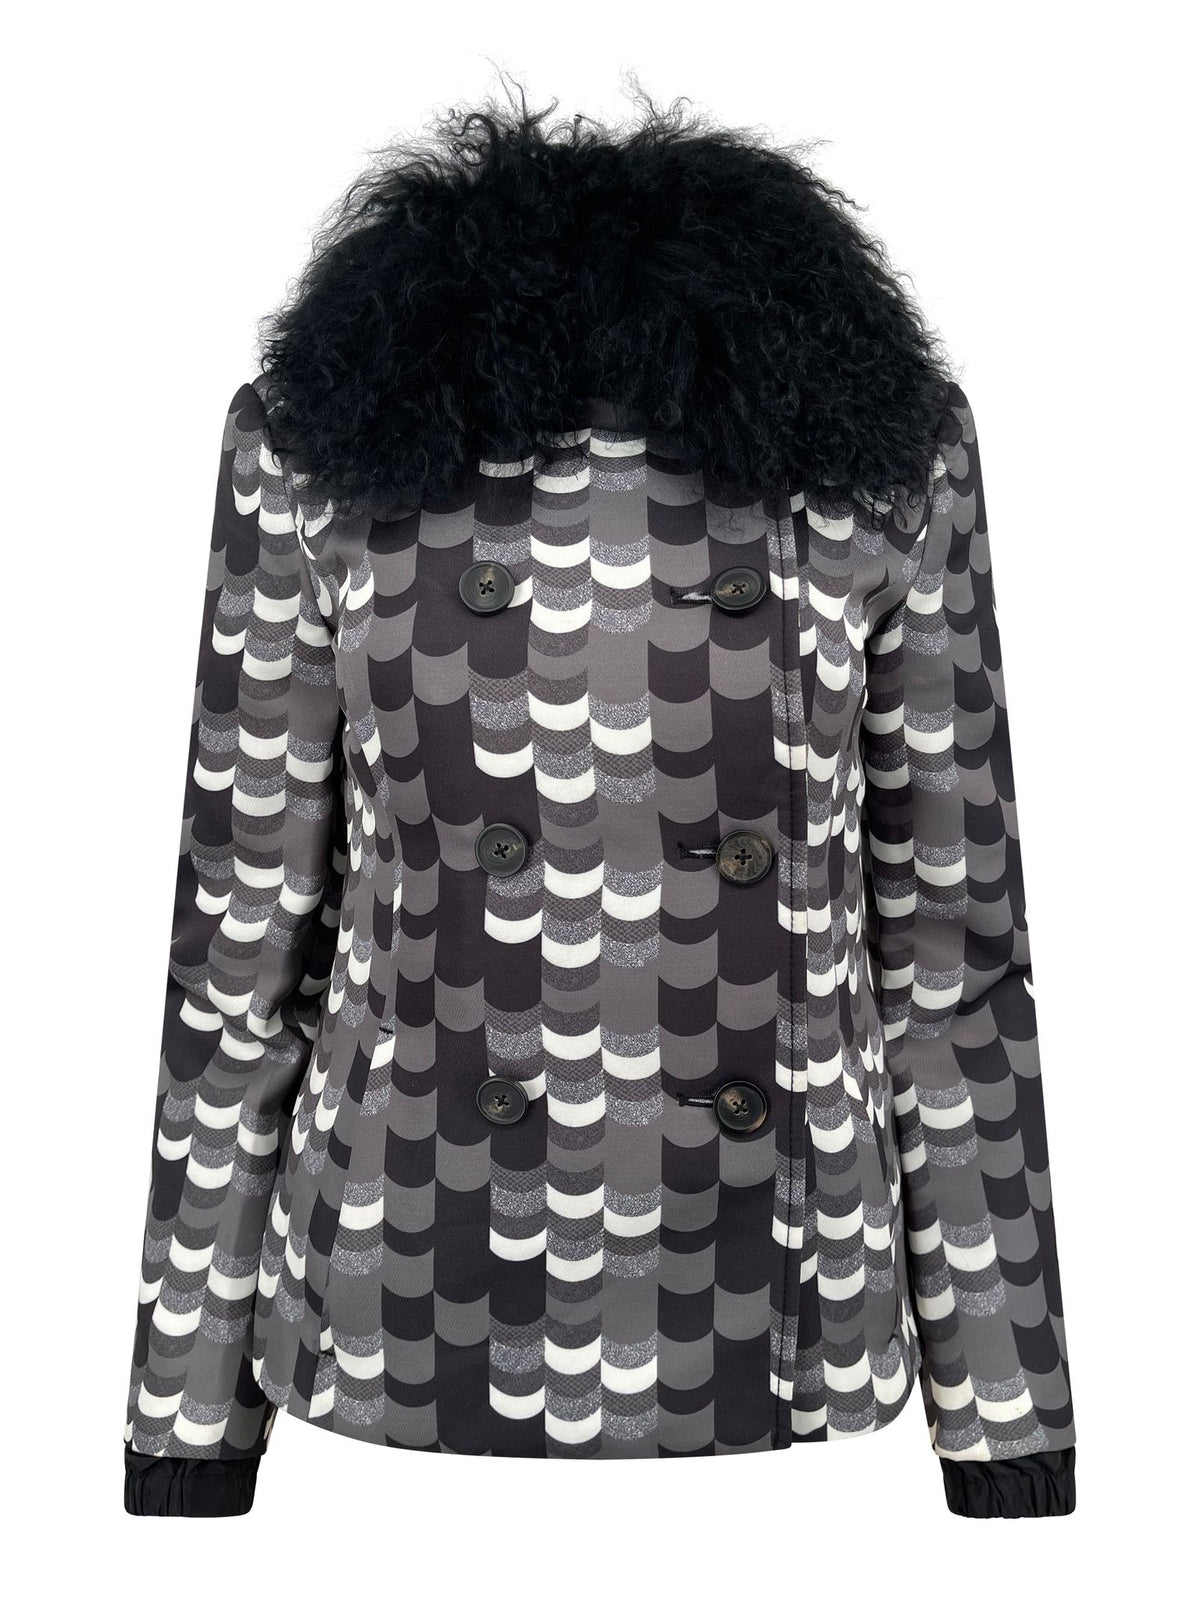 Prada F/W 2014 Short Grey & Black Afghan Coat - ONFEMME By Lindsey's Kloset